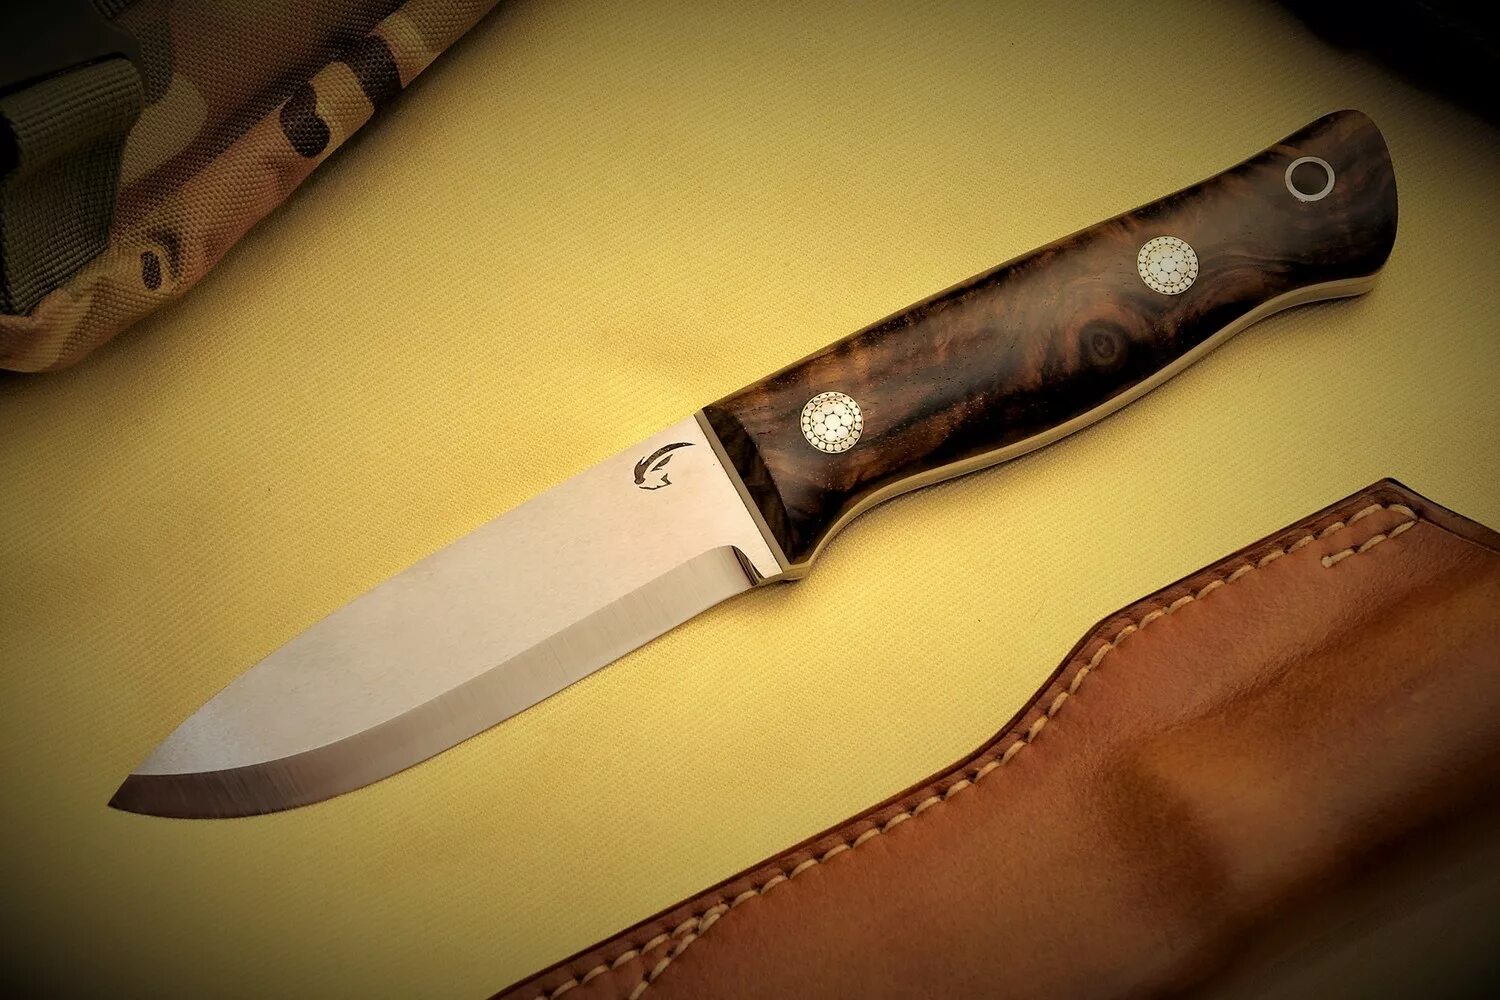 Beaver Knife Bushcraft. Ножи Бивер НАЙФ. BEAVERKNIFE - Bushcraft America нож. Beaver Knife бушкрафт Америка. Купить нож бивер